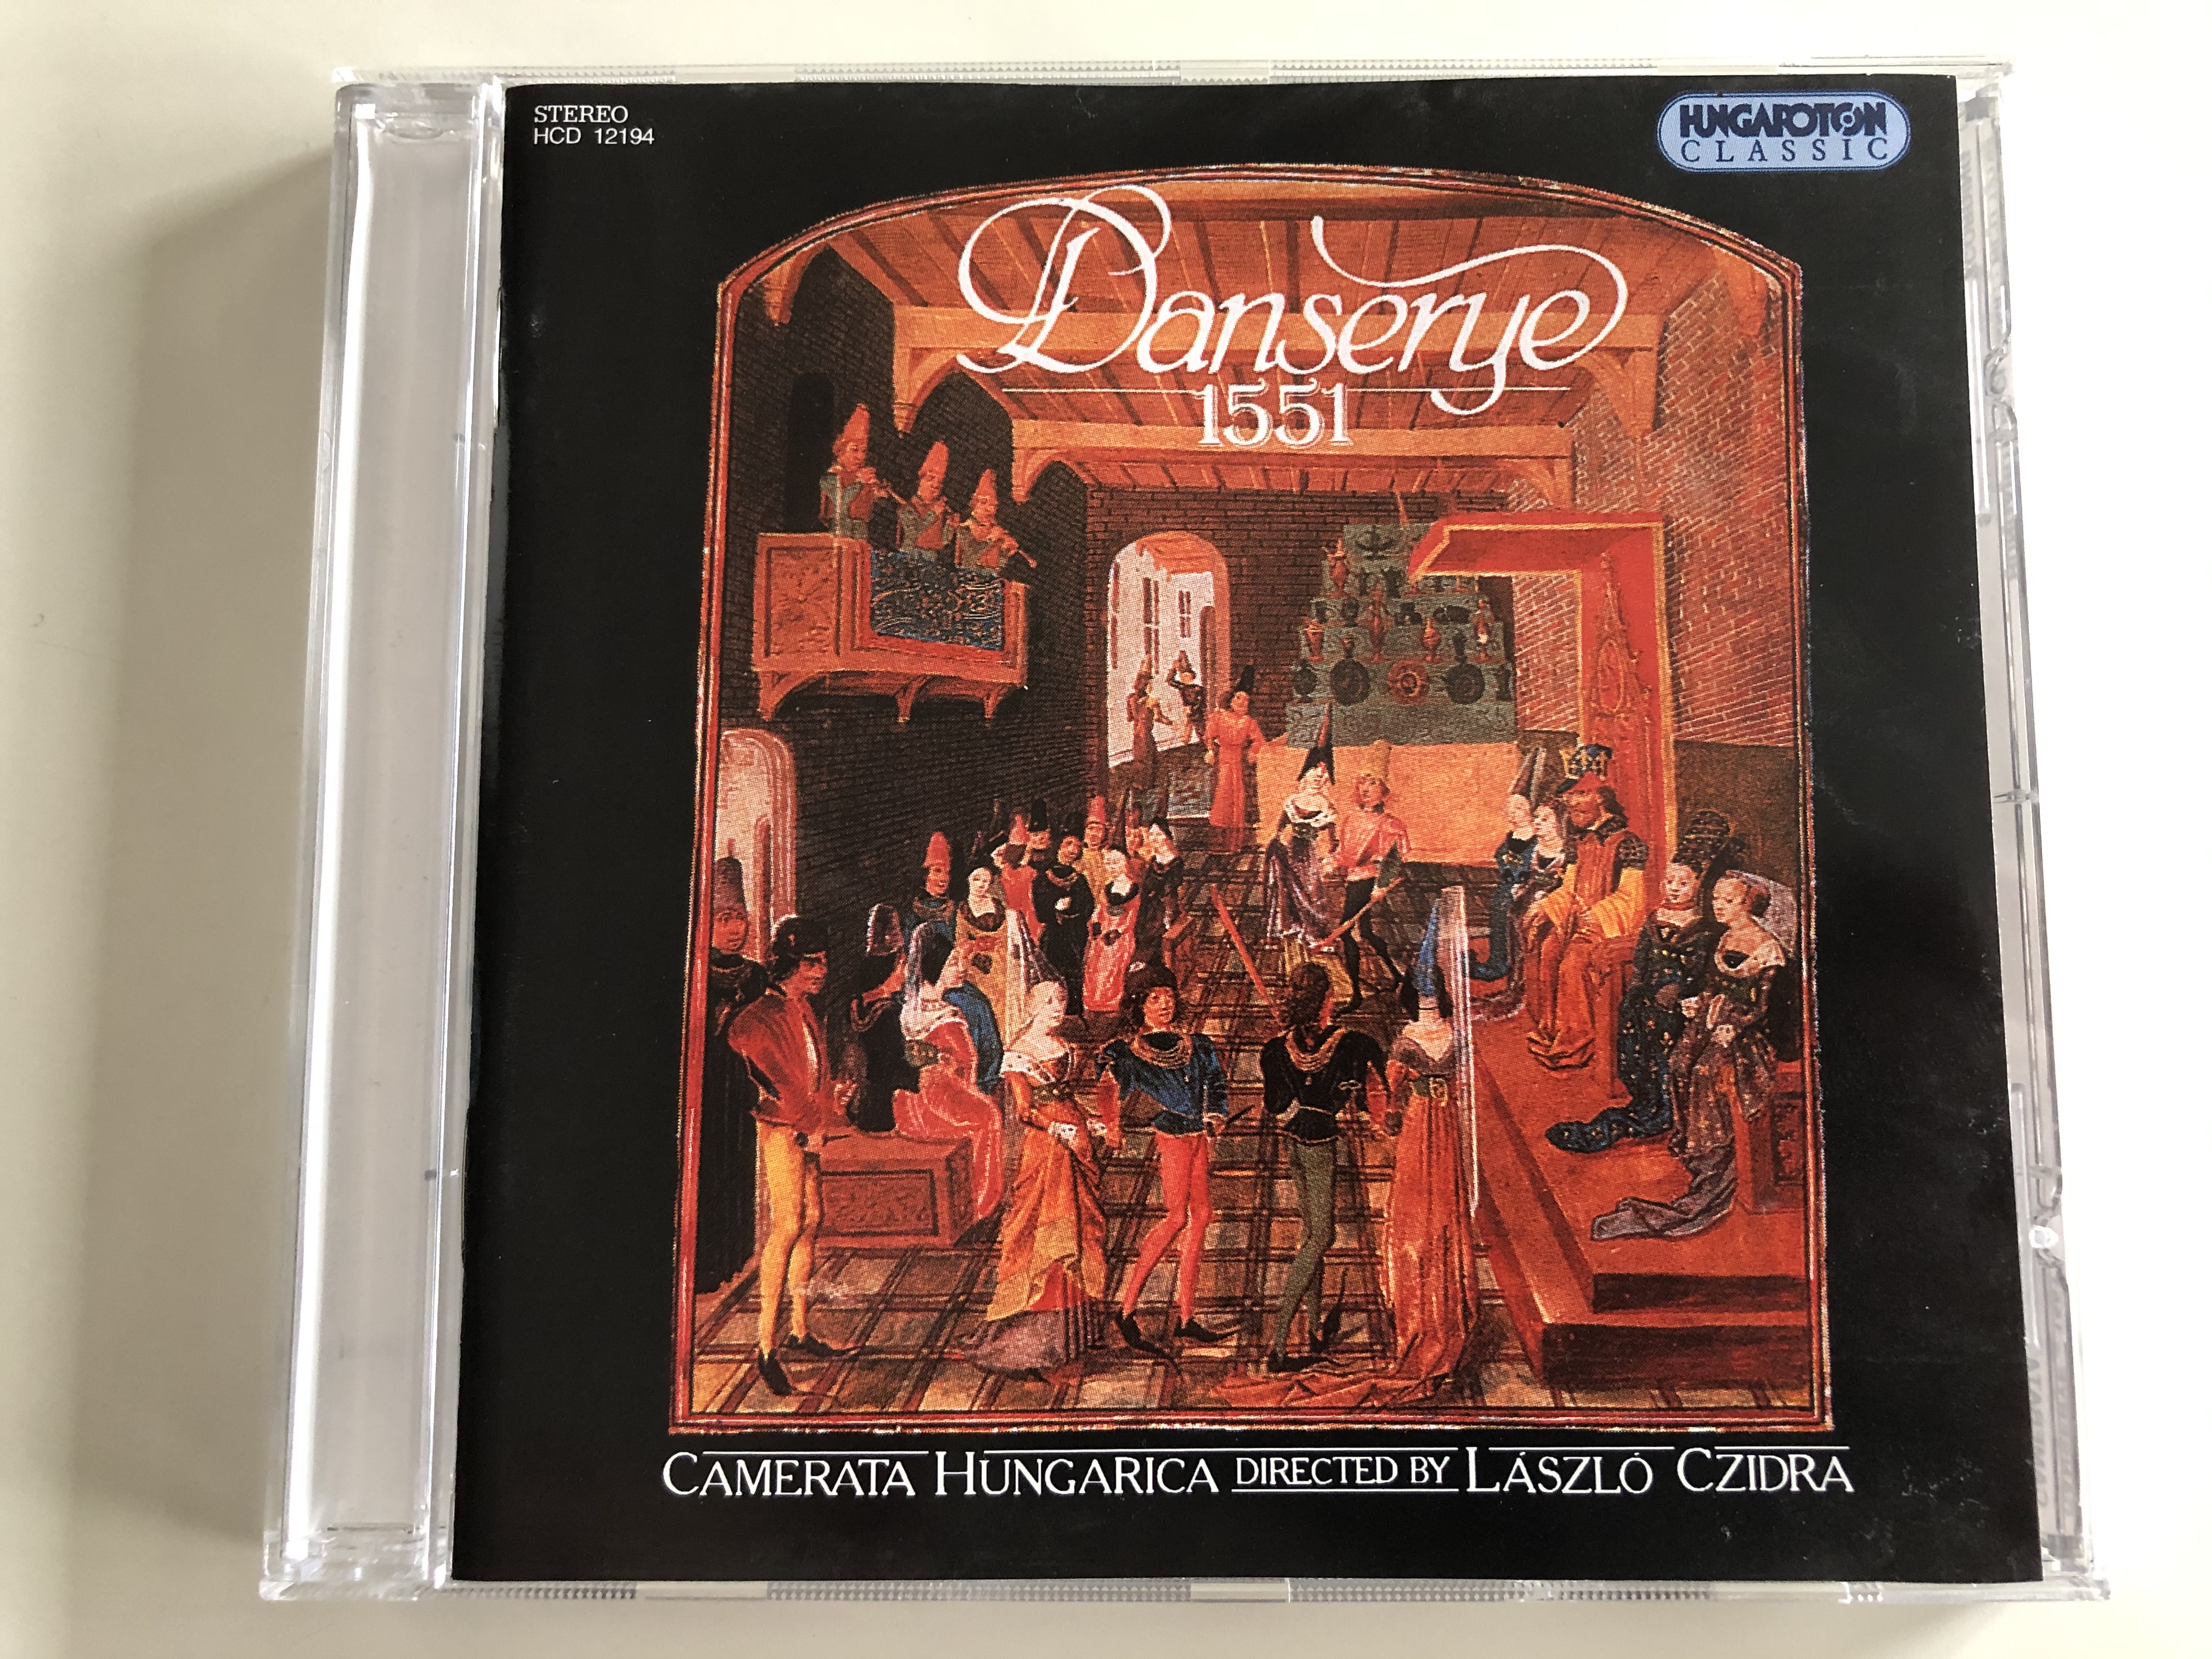 danserye-1551-camerata-hungarica-directed-by-l-szl-czidra-hungaroton-classic-audio-cd-1995-stereo-hcd-12194-1-.jpg